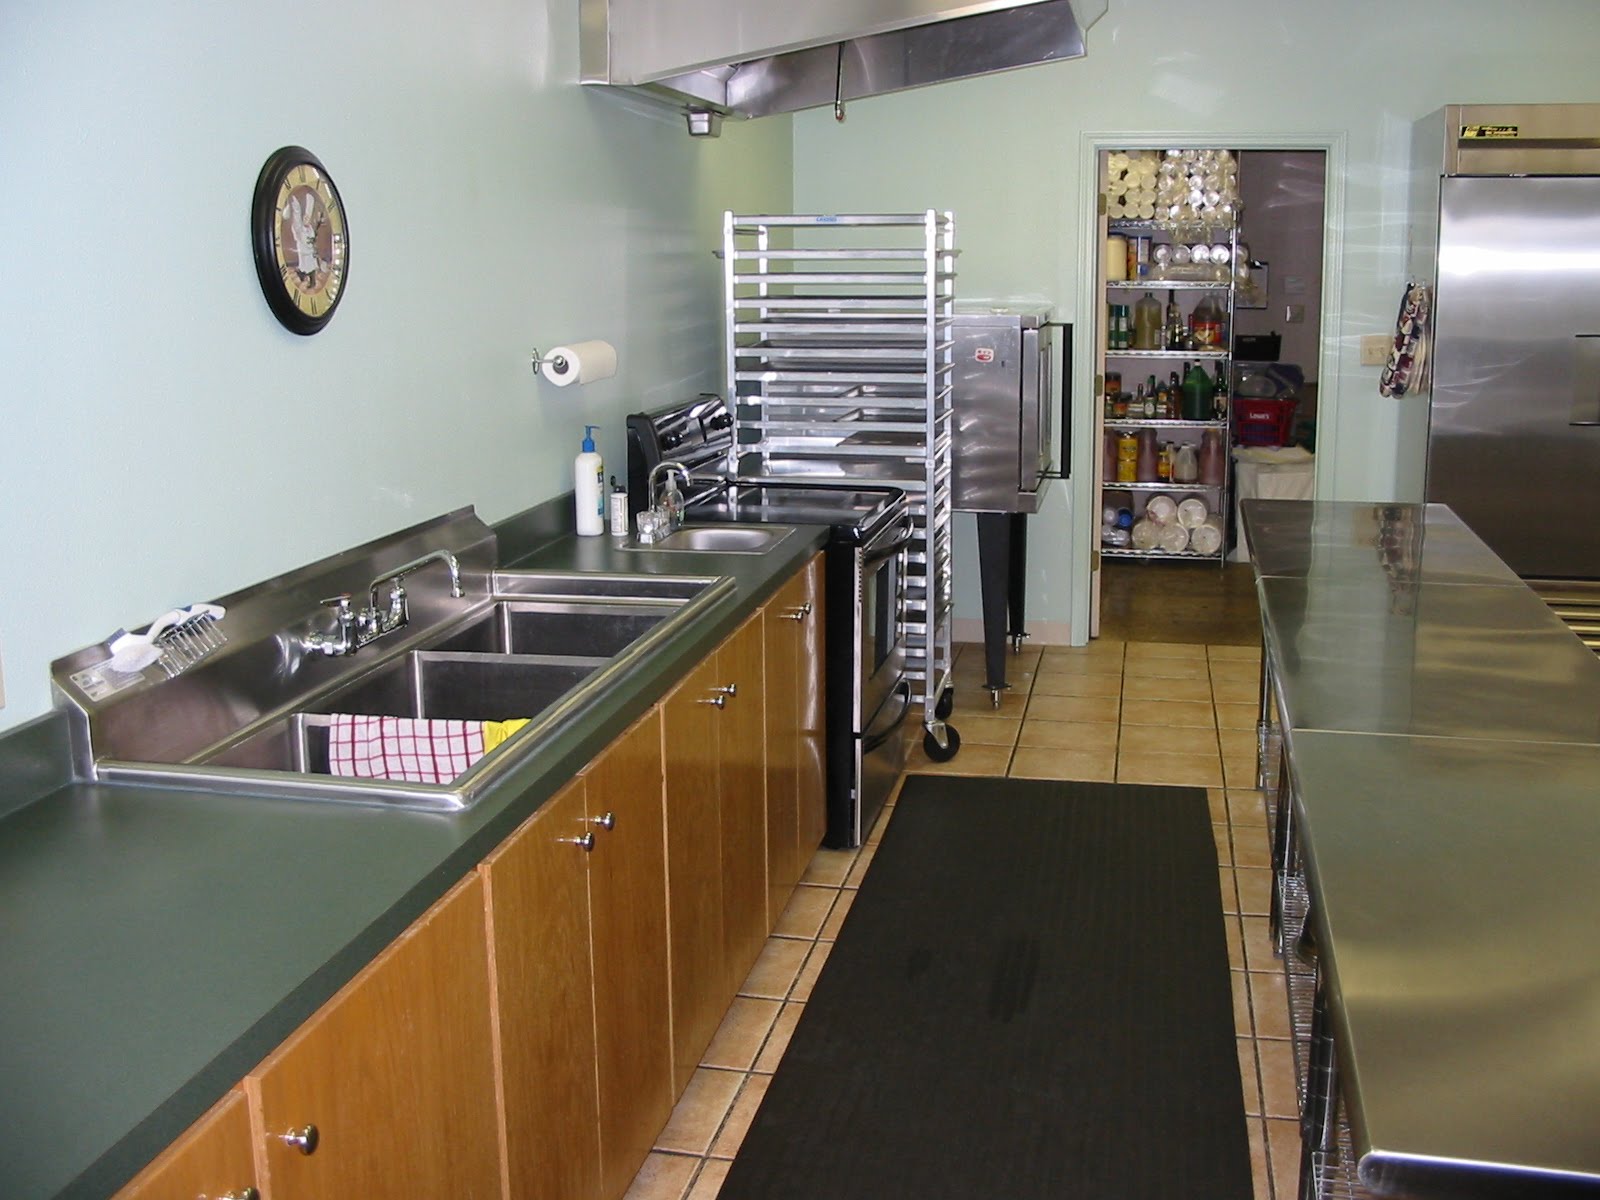 the kitchen layout.